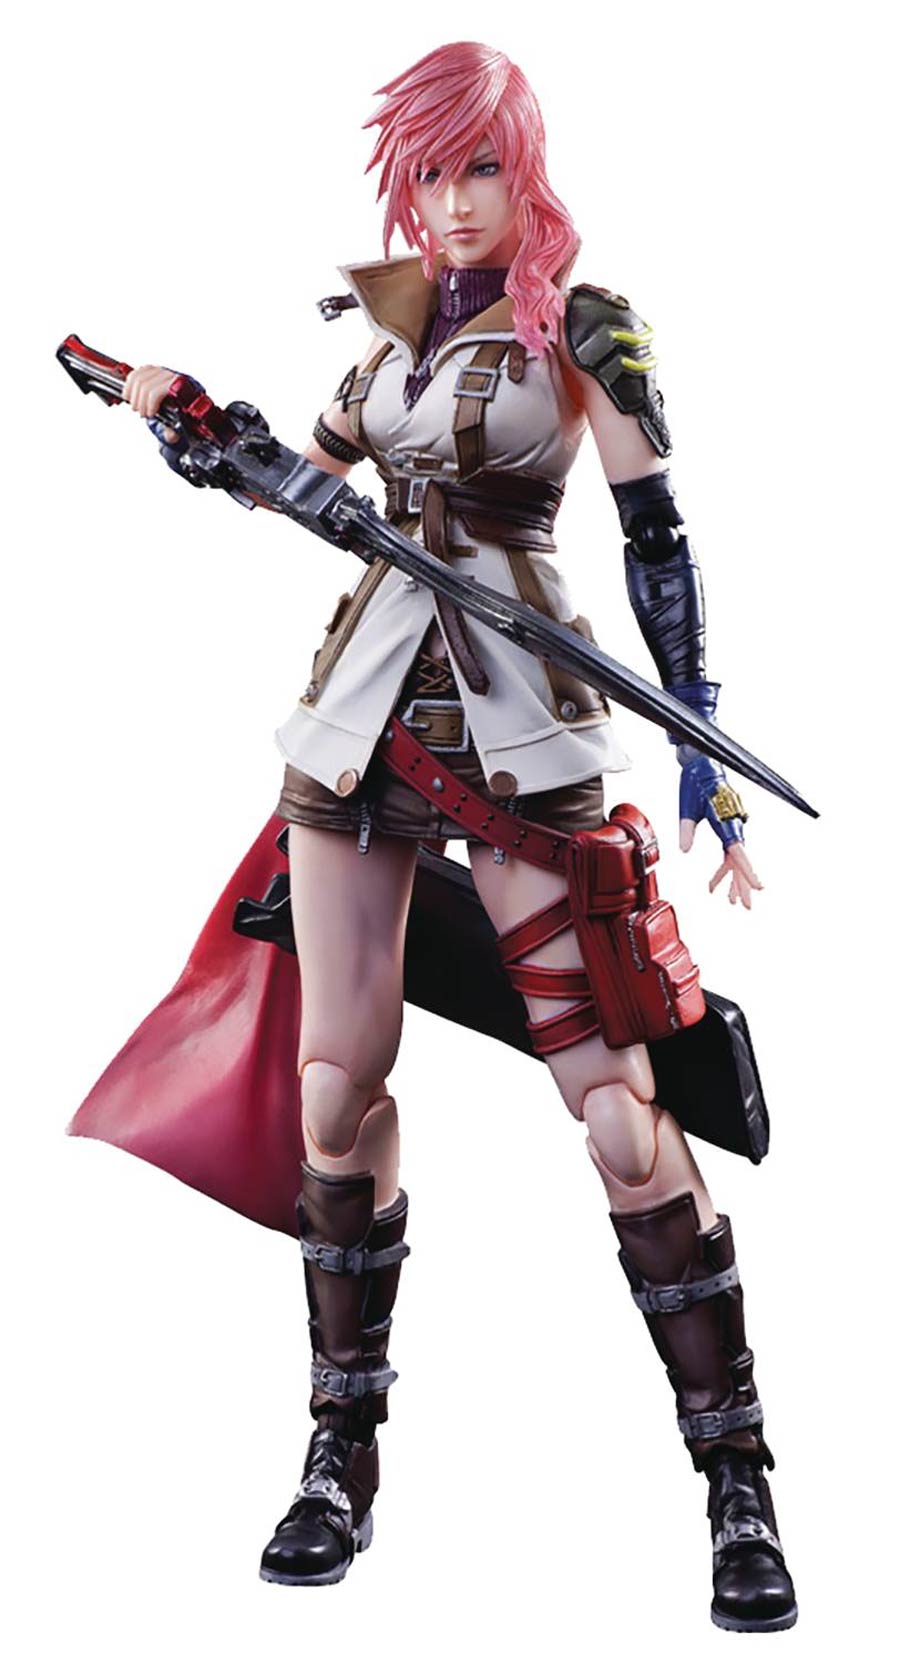 Dissidia Final Fantasy Play Arts Kai Action Figure - Lightning